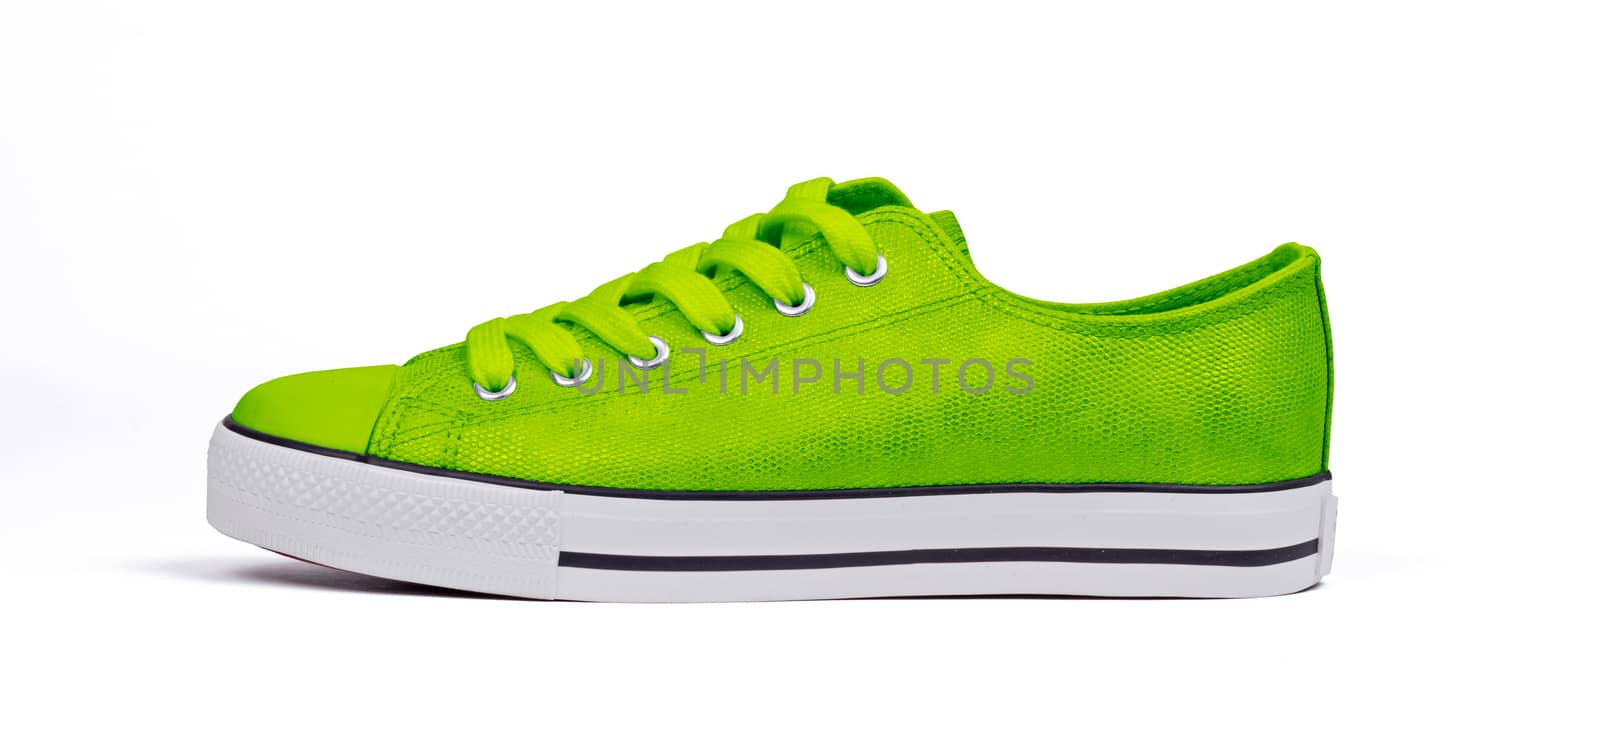 Single shoe isolated on white background - Green